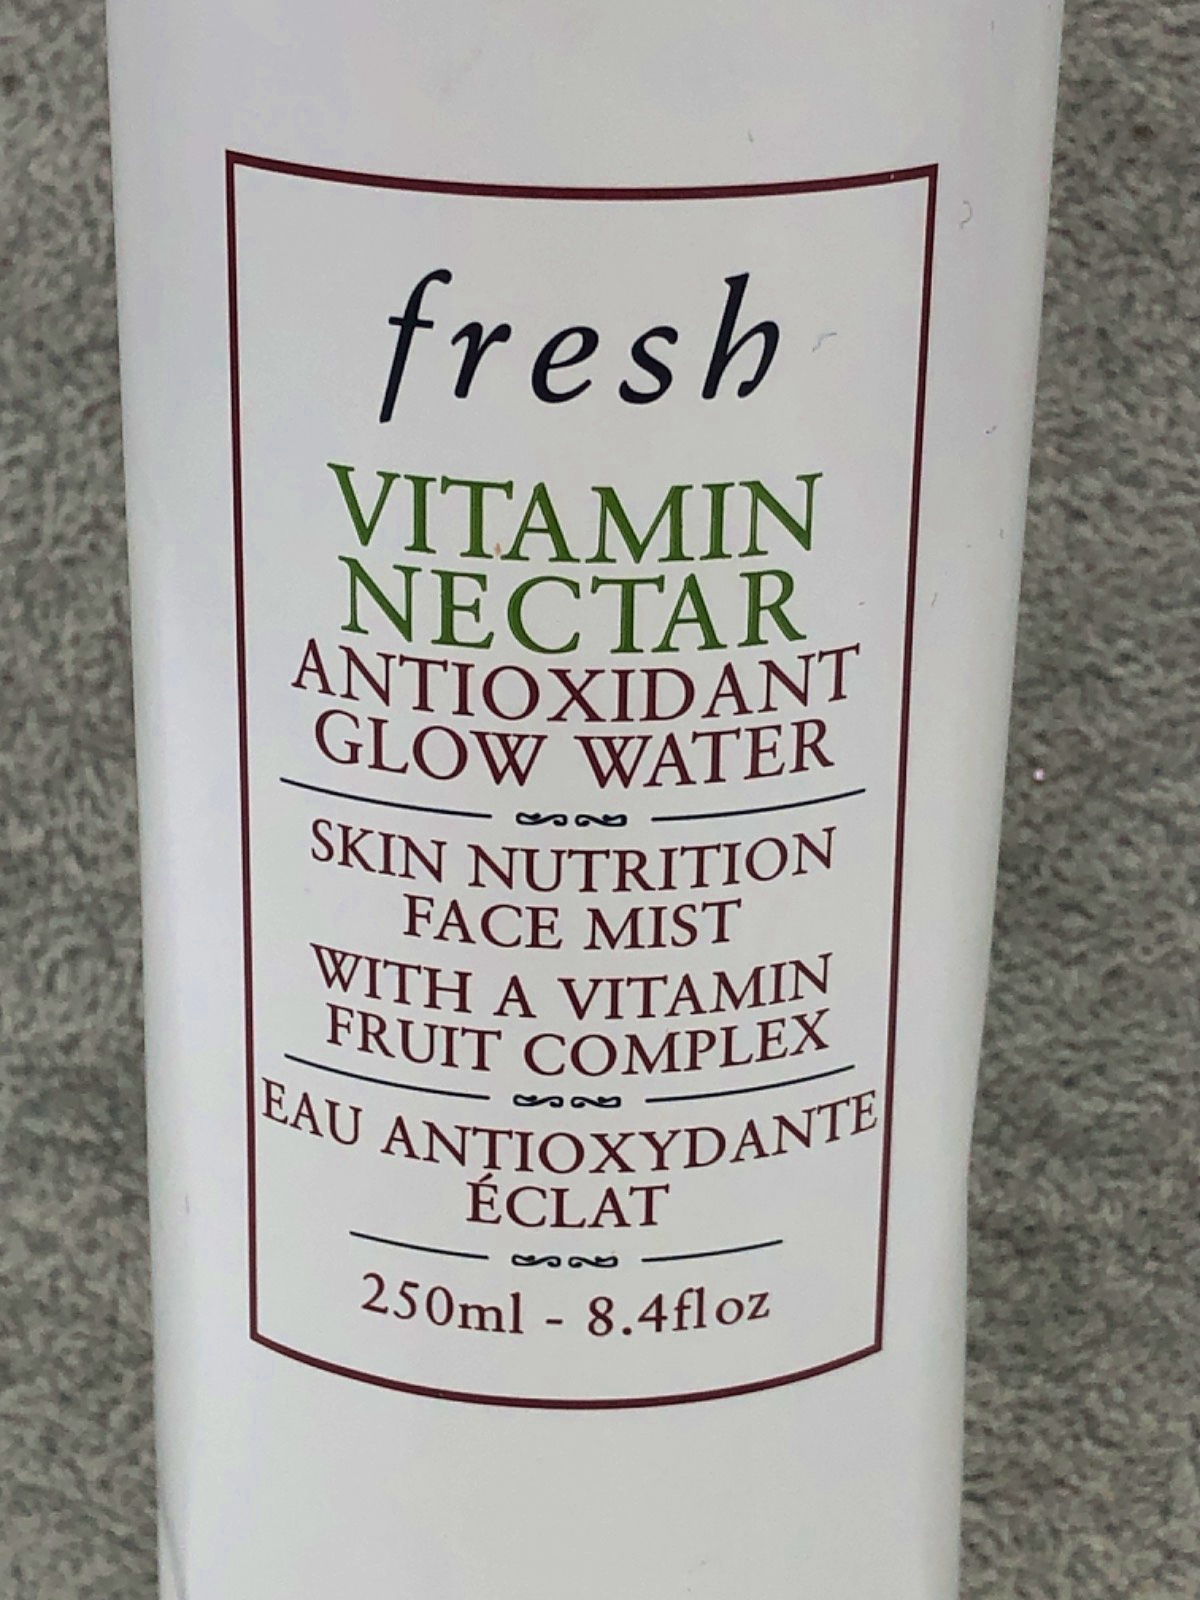 Fresh Vitamin Nectar Antioxidant Glow Water 250ml